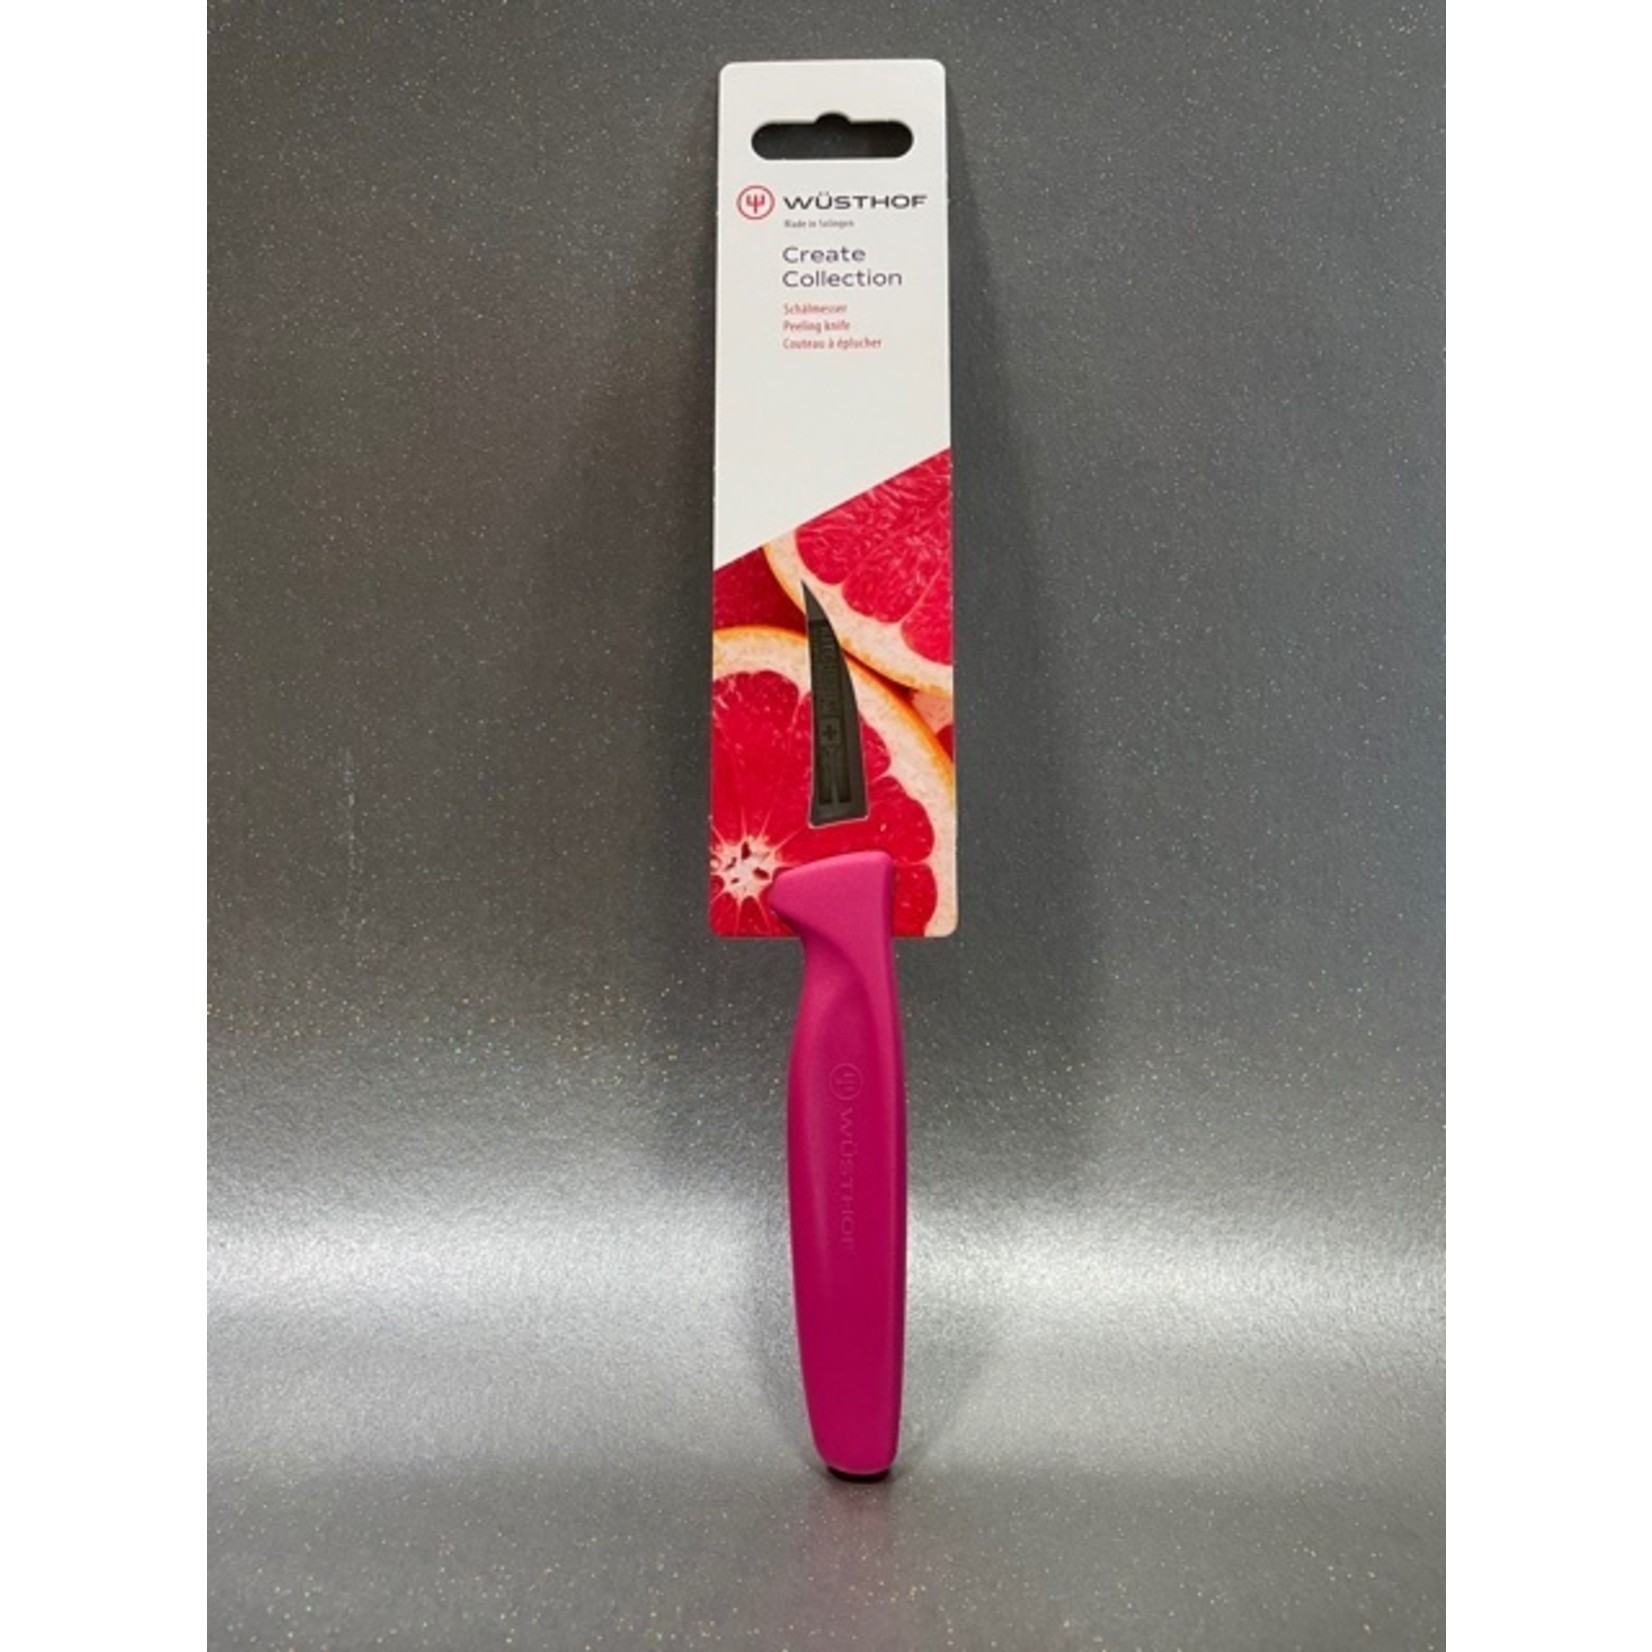 WUSTHOF WUSTHOF Kitchen Therapy Peeling Knife 2.5" - Pink